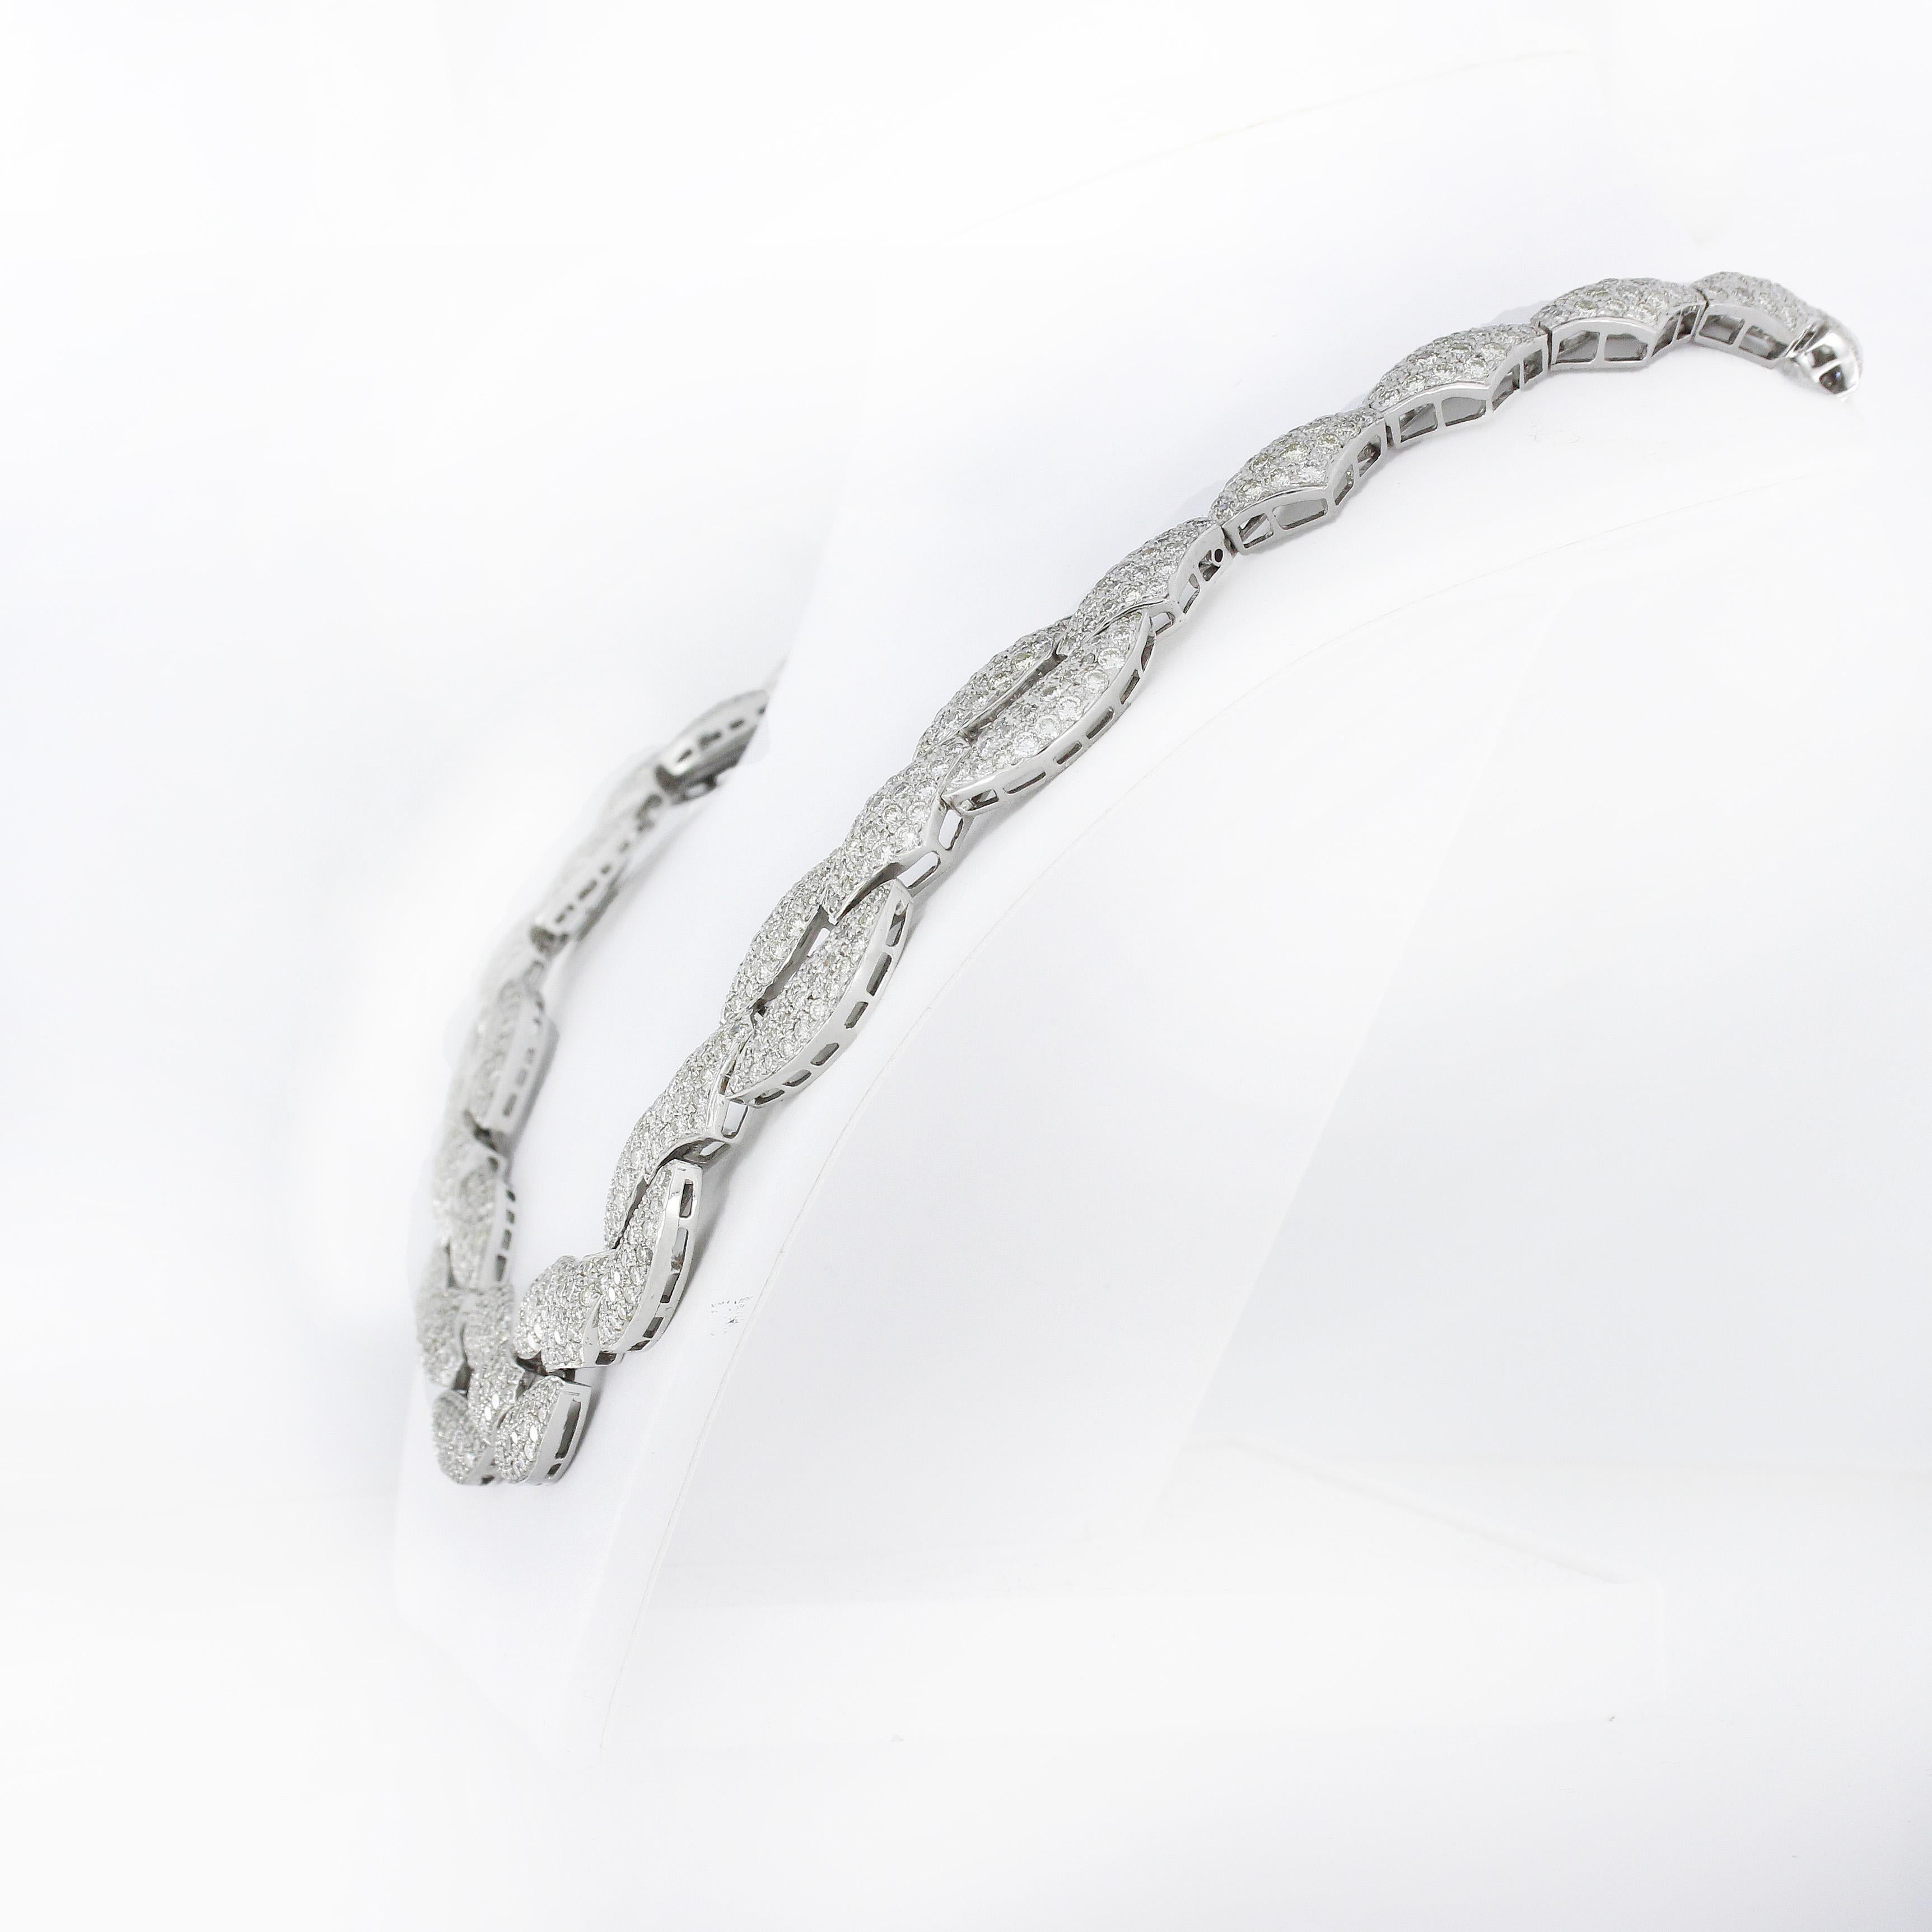 Brilliant Cut 34.6 ct. Diamond Bracelet & Necklace White Gold Jewelry Set For Sale